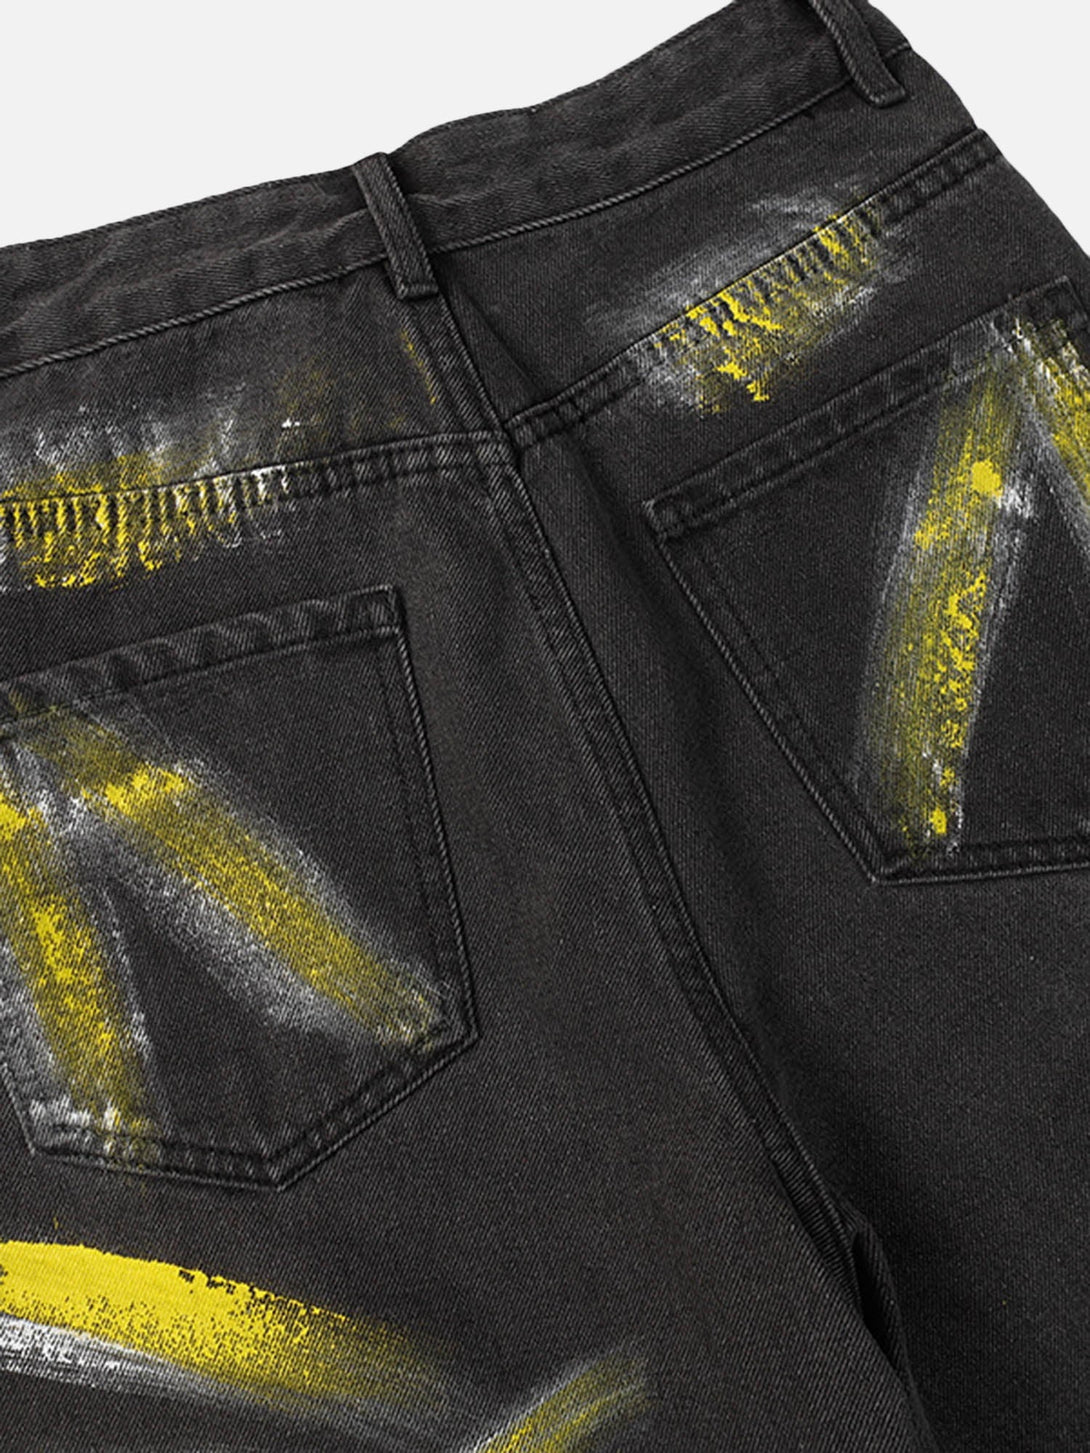 Majesda® - High Street Heavy Industry Graffiti Washed Jeans- Outfit Ideas - Streetwear Fashion - majesda.com